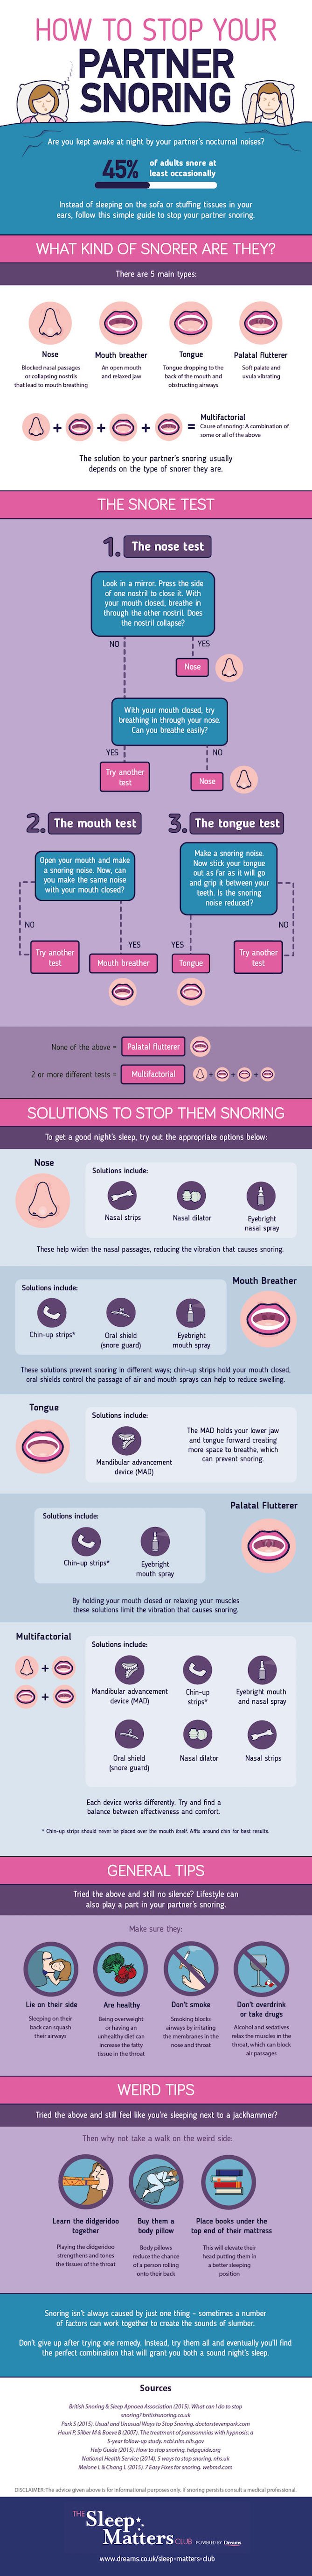 stop-your-partner-snoring-infographic.jpg